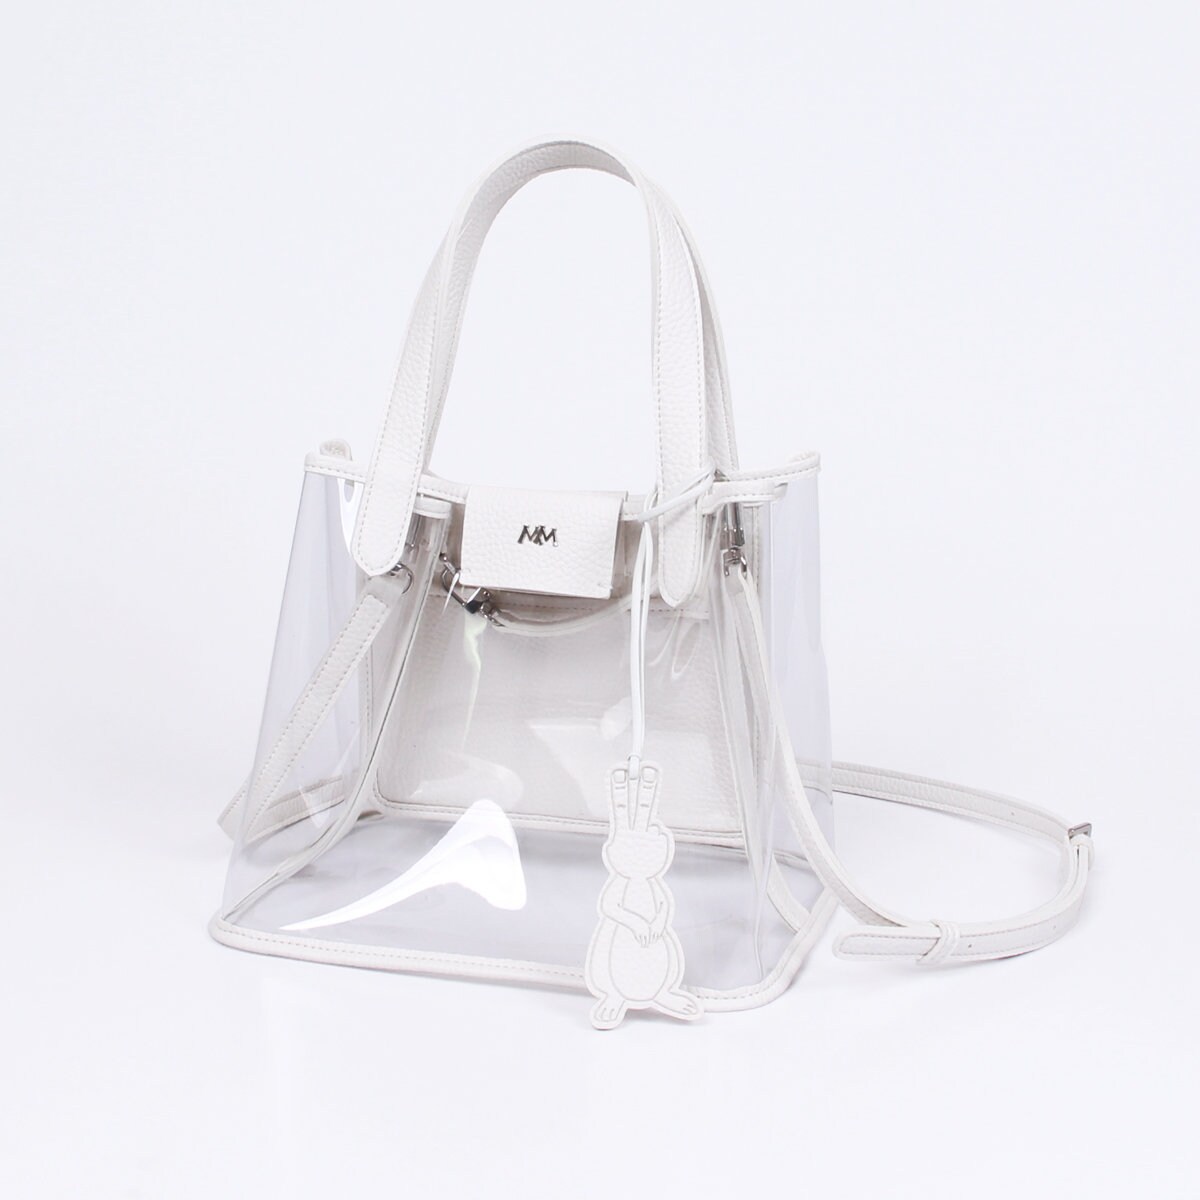  LEMITA Crowd bag spring and summer simple vertical pattern  nylon tote bag handbag shoulder shopping bag, off-white, 30.5 * 8 * 23cm :  Clothing, Shoes & Jewelry